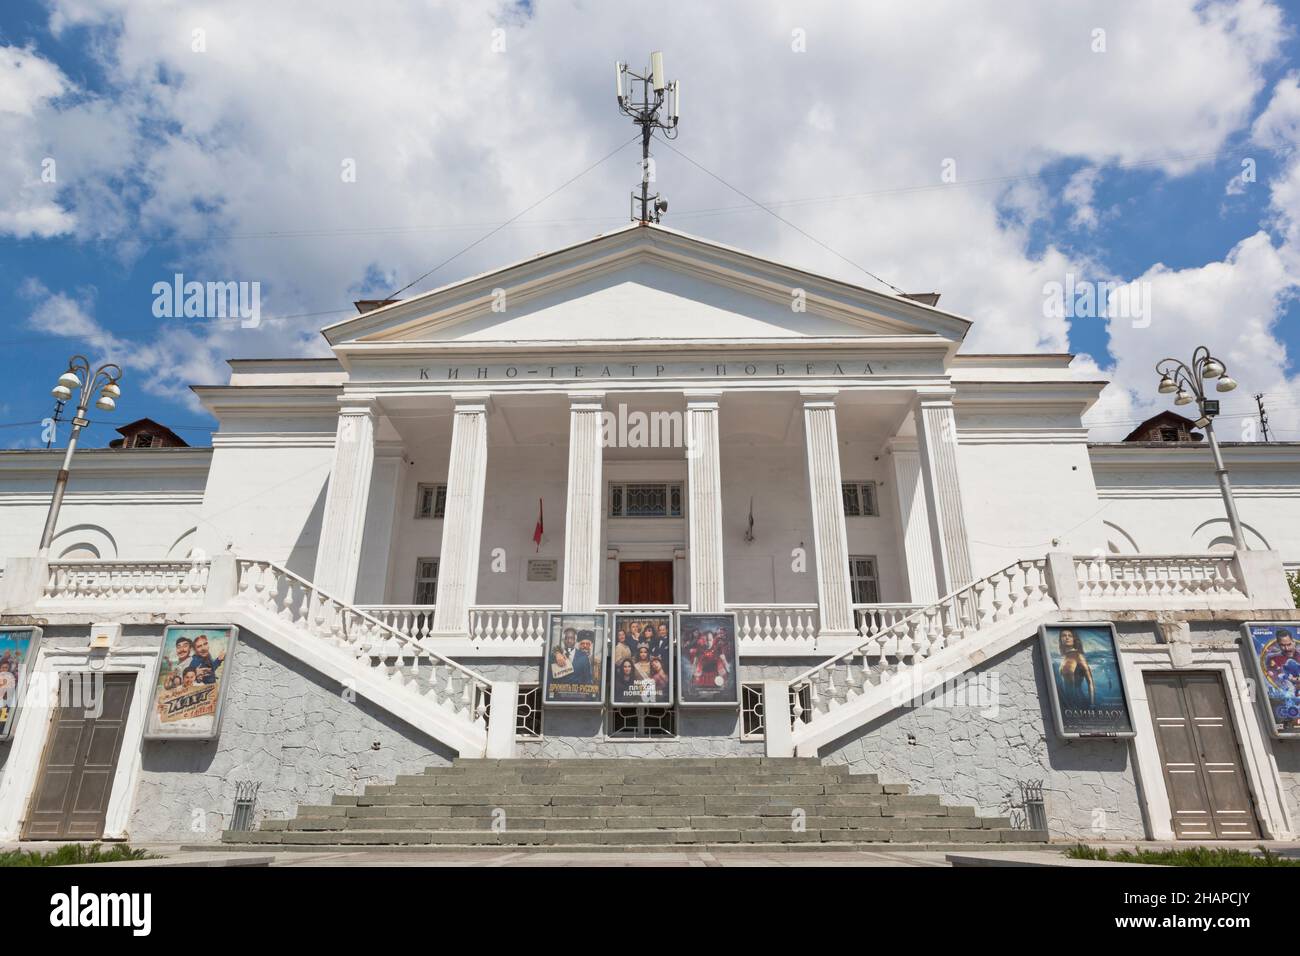 Sevastopol, Crimea, Russia - July 29, 2020: Building of the cinema 'Victory' on Bolshaya Morskaya street in the hero city of Sevastopol, Crimea Stock Photo